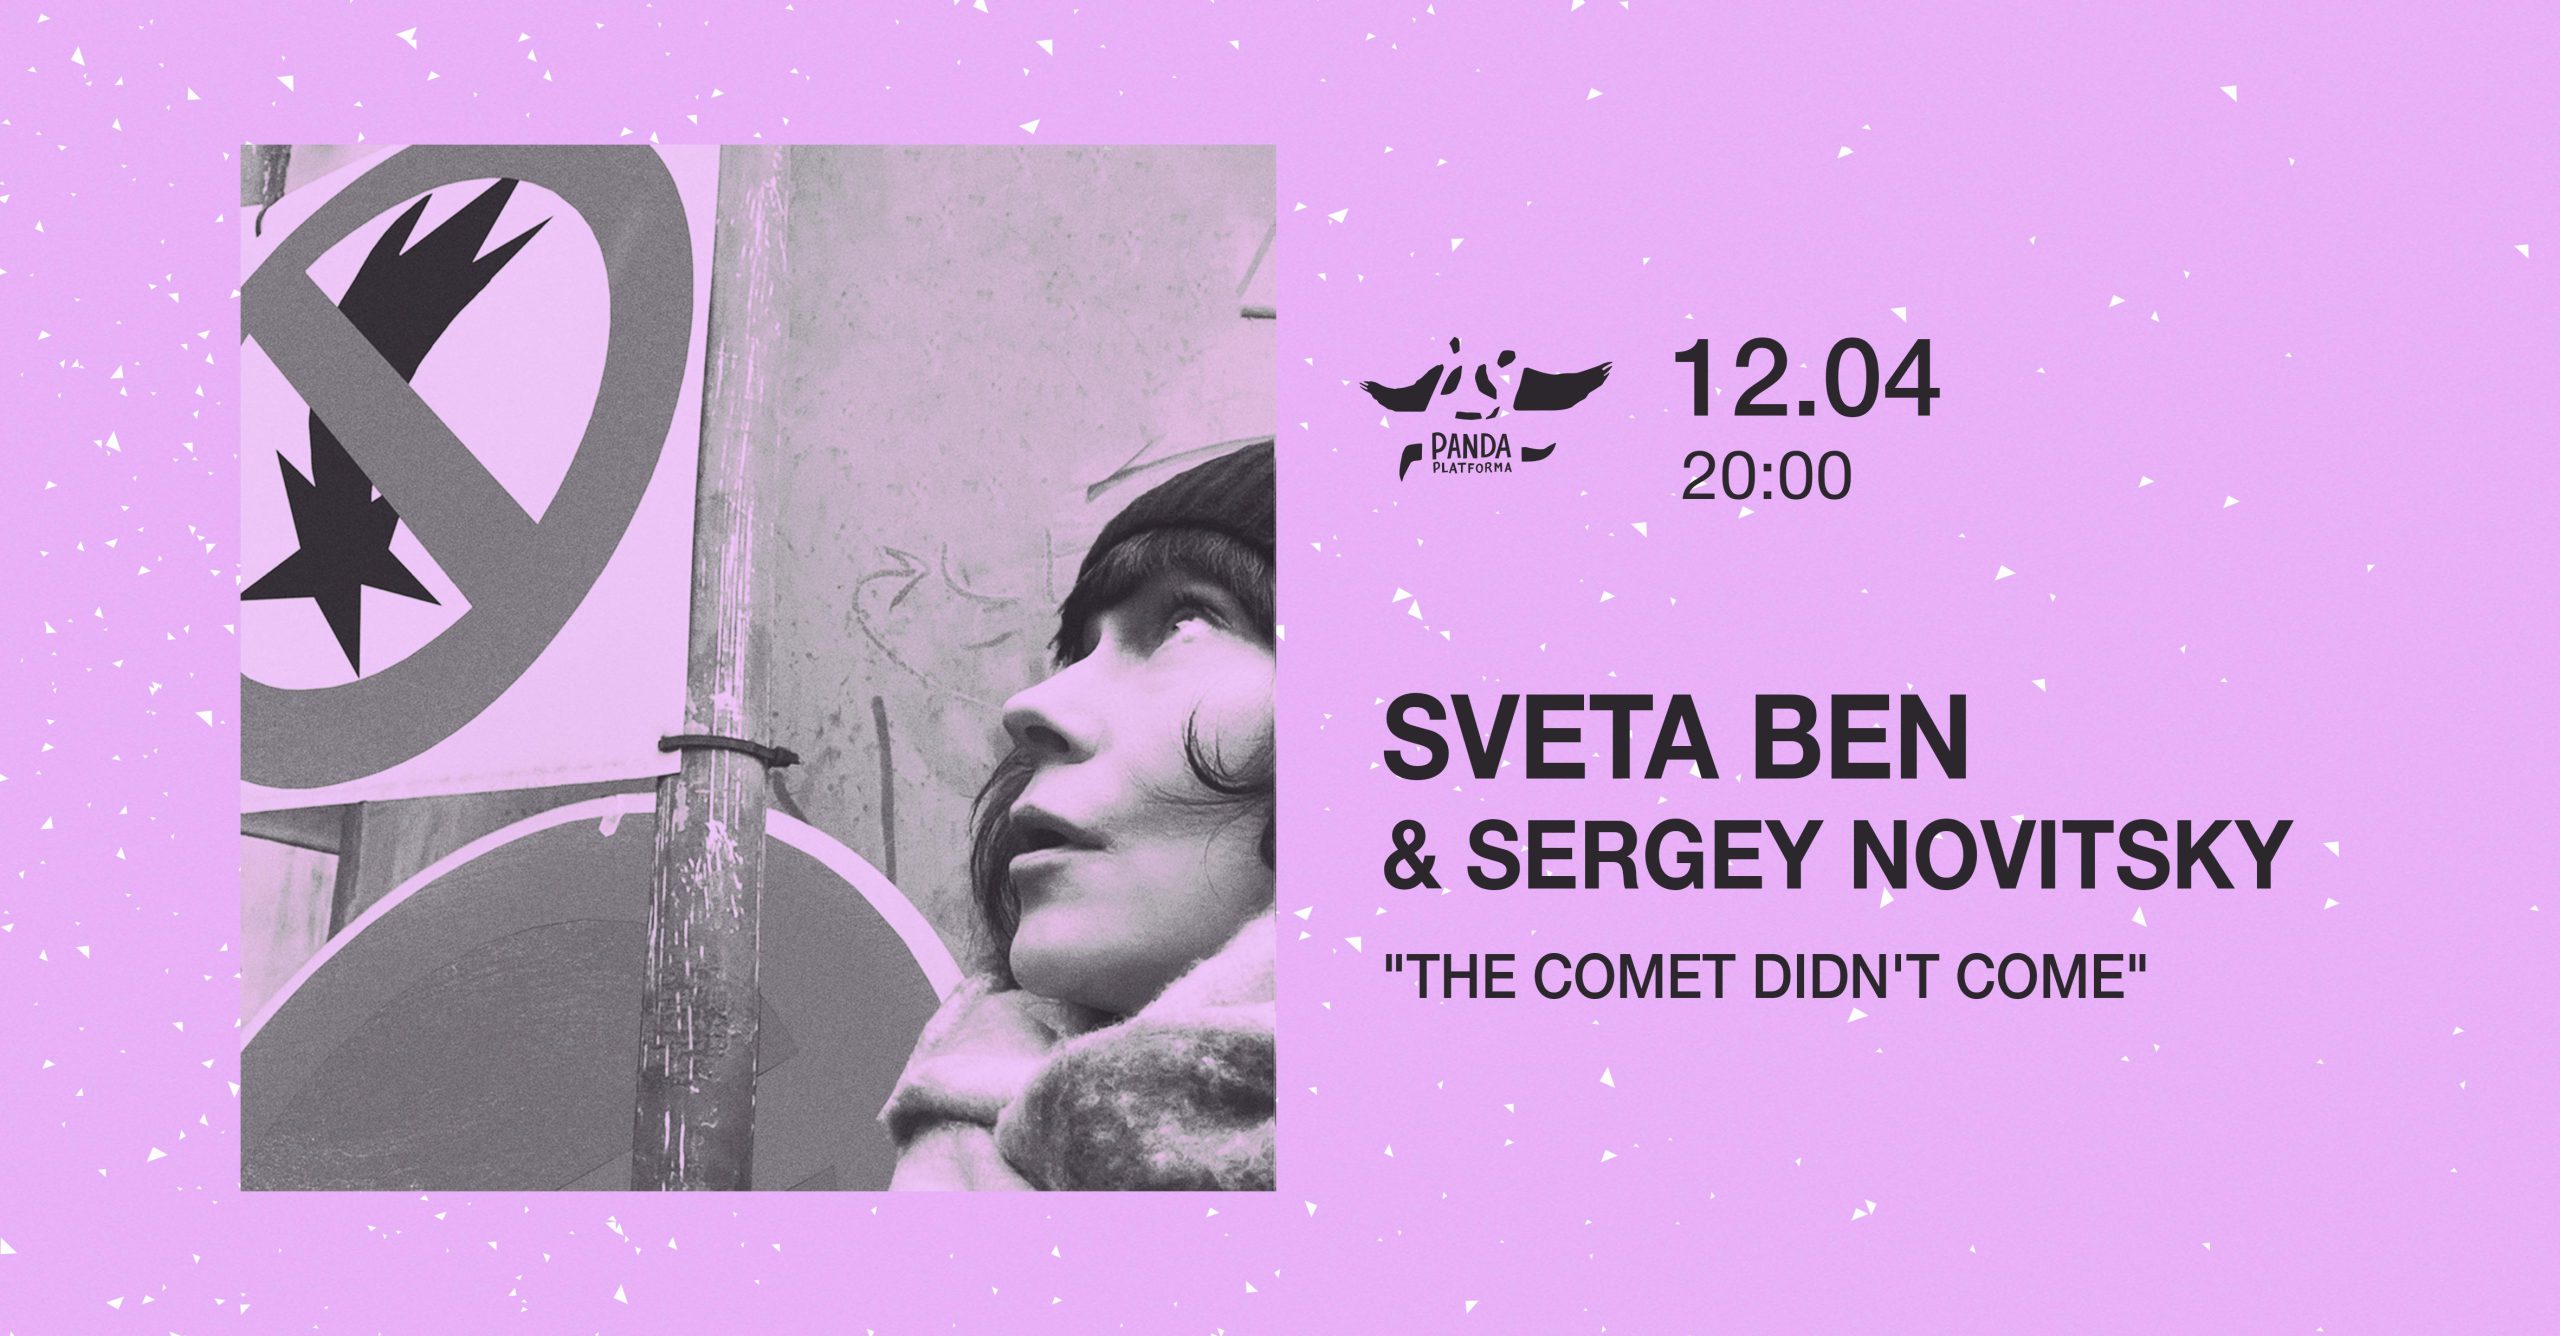 “The comet didn’t come” // Sveta Ben & Sergey Novitsky - 12/04, 20:00